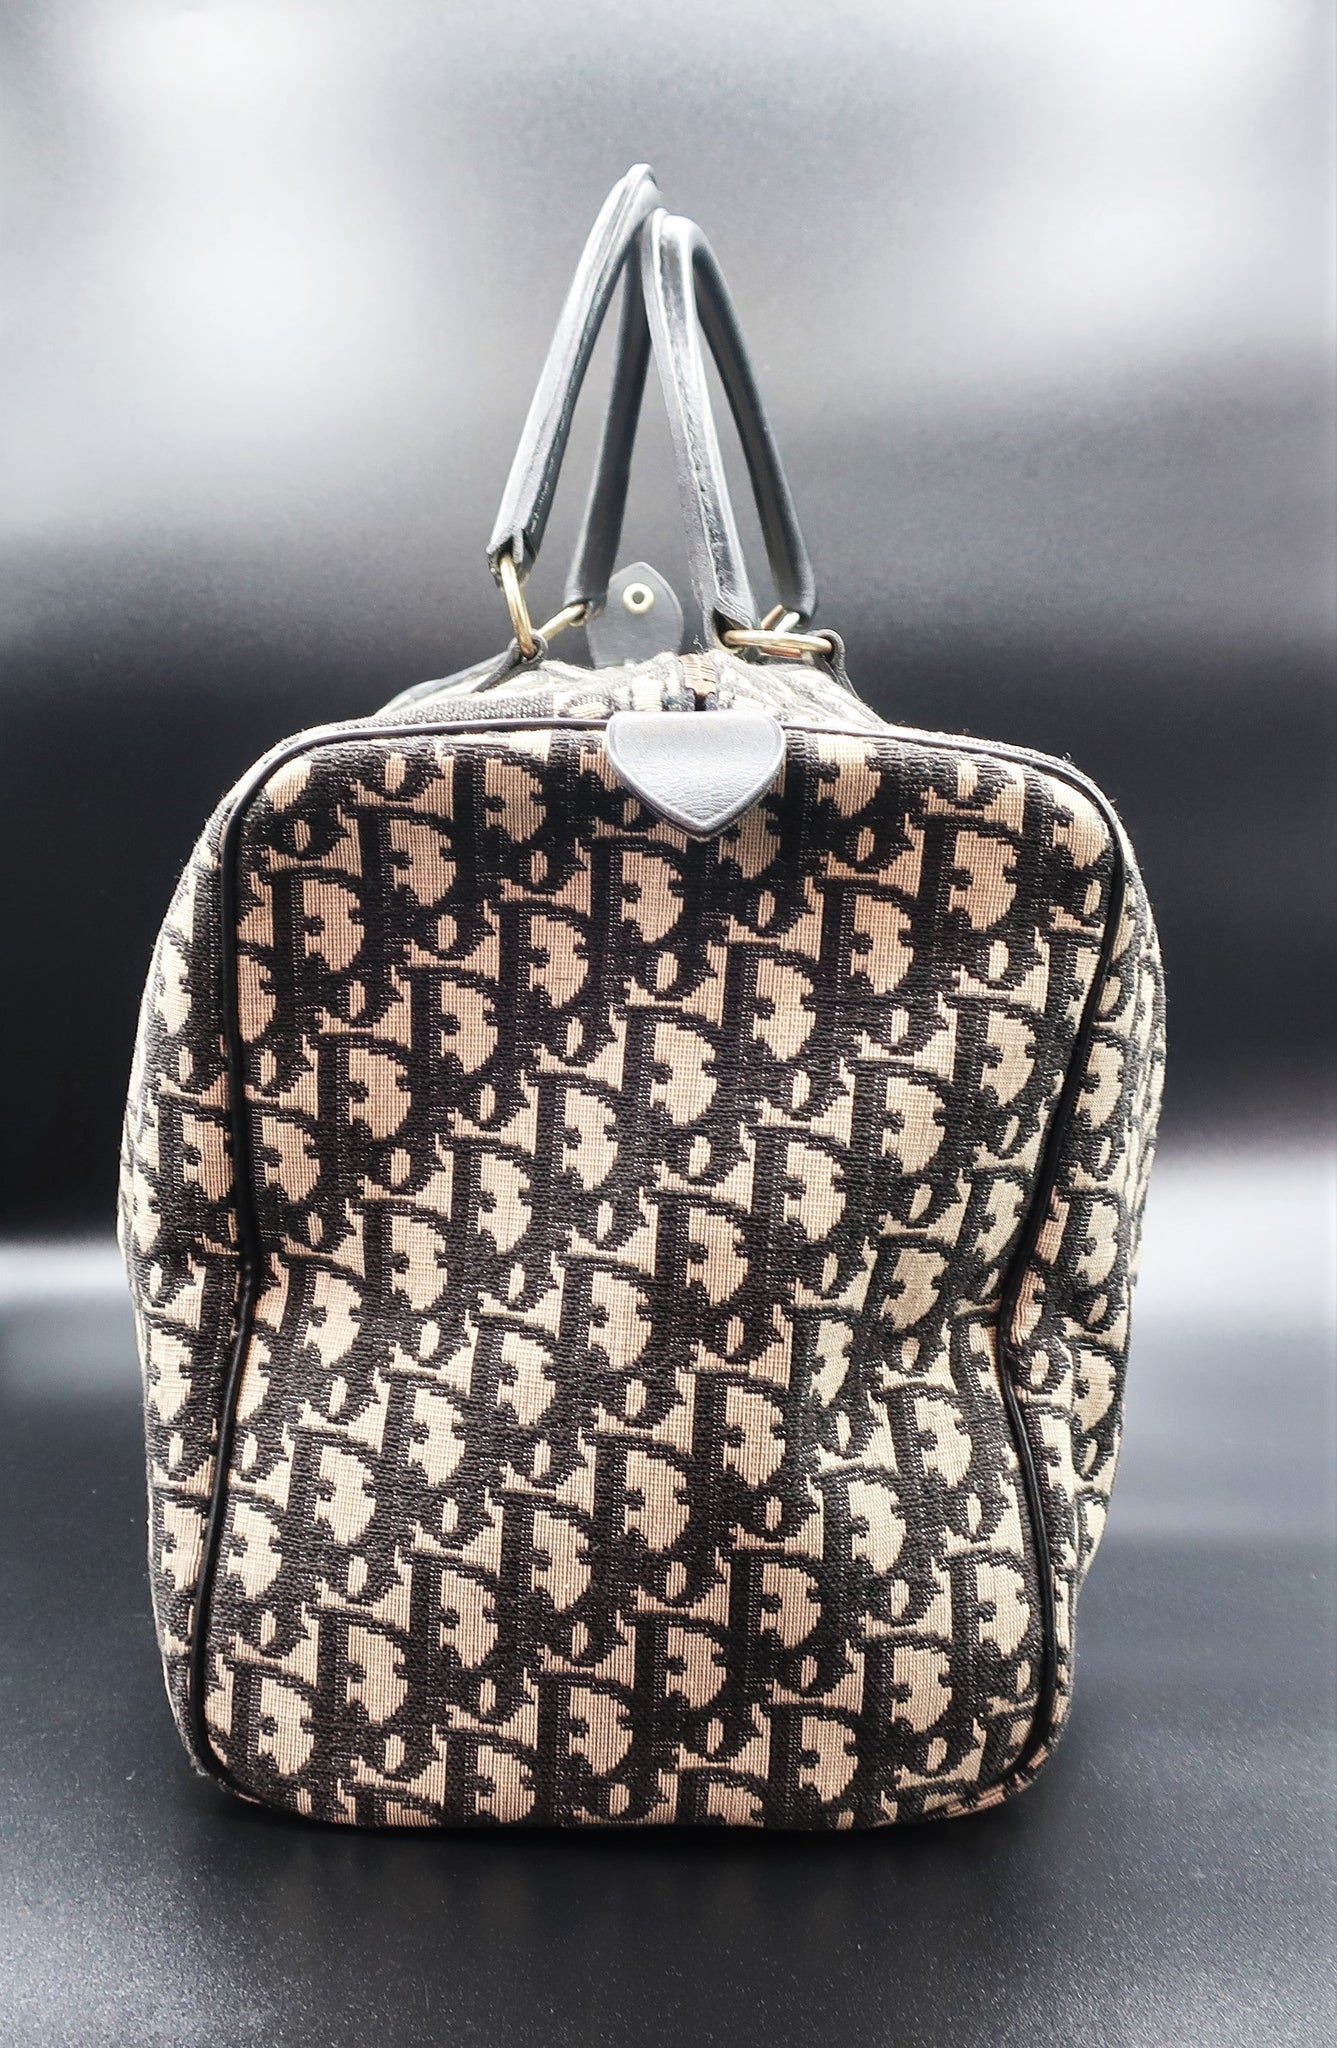 Vintage Christian Dior Boston Bag 40 - Vintage Handbag